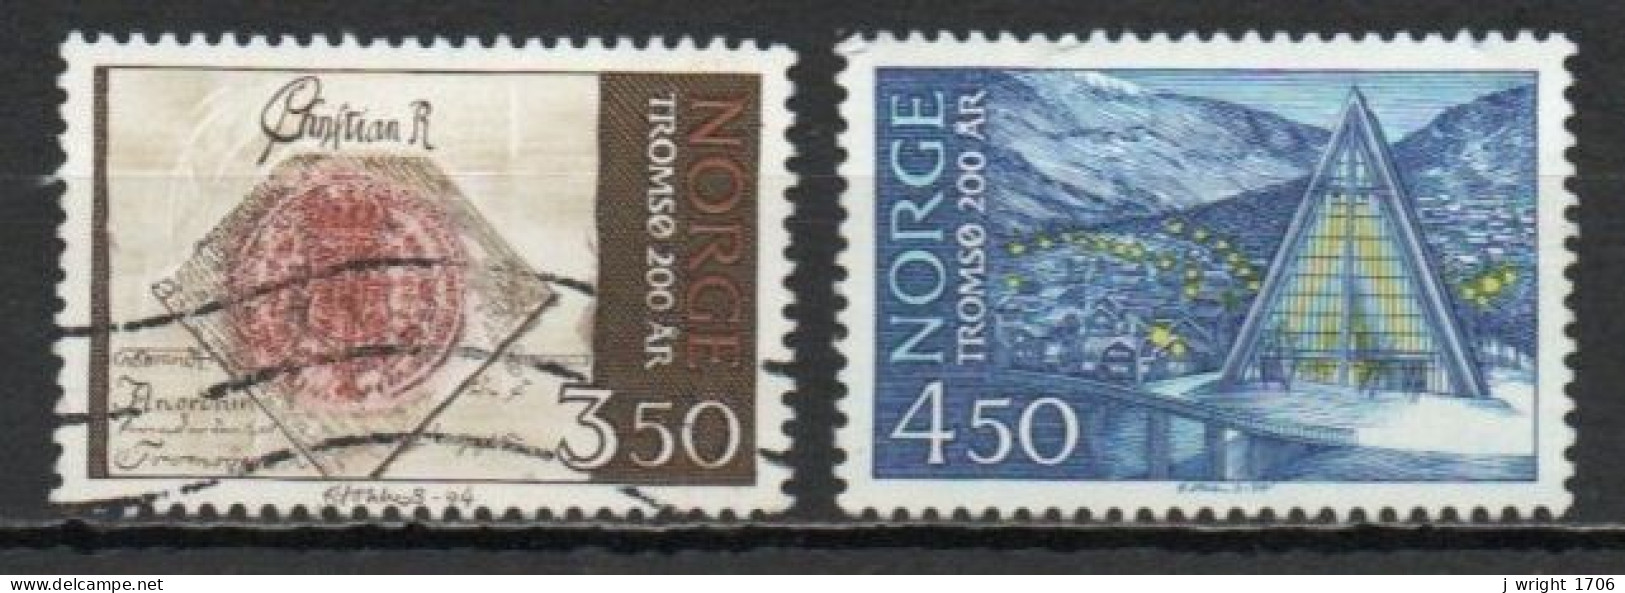 Norway, 1994, Tromsö Bicentenary, Set, USED - Used Stamps